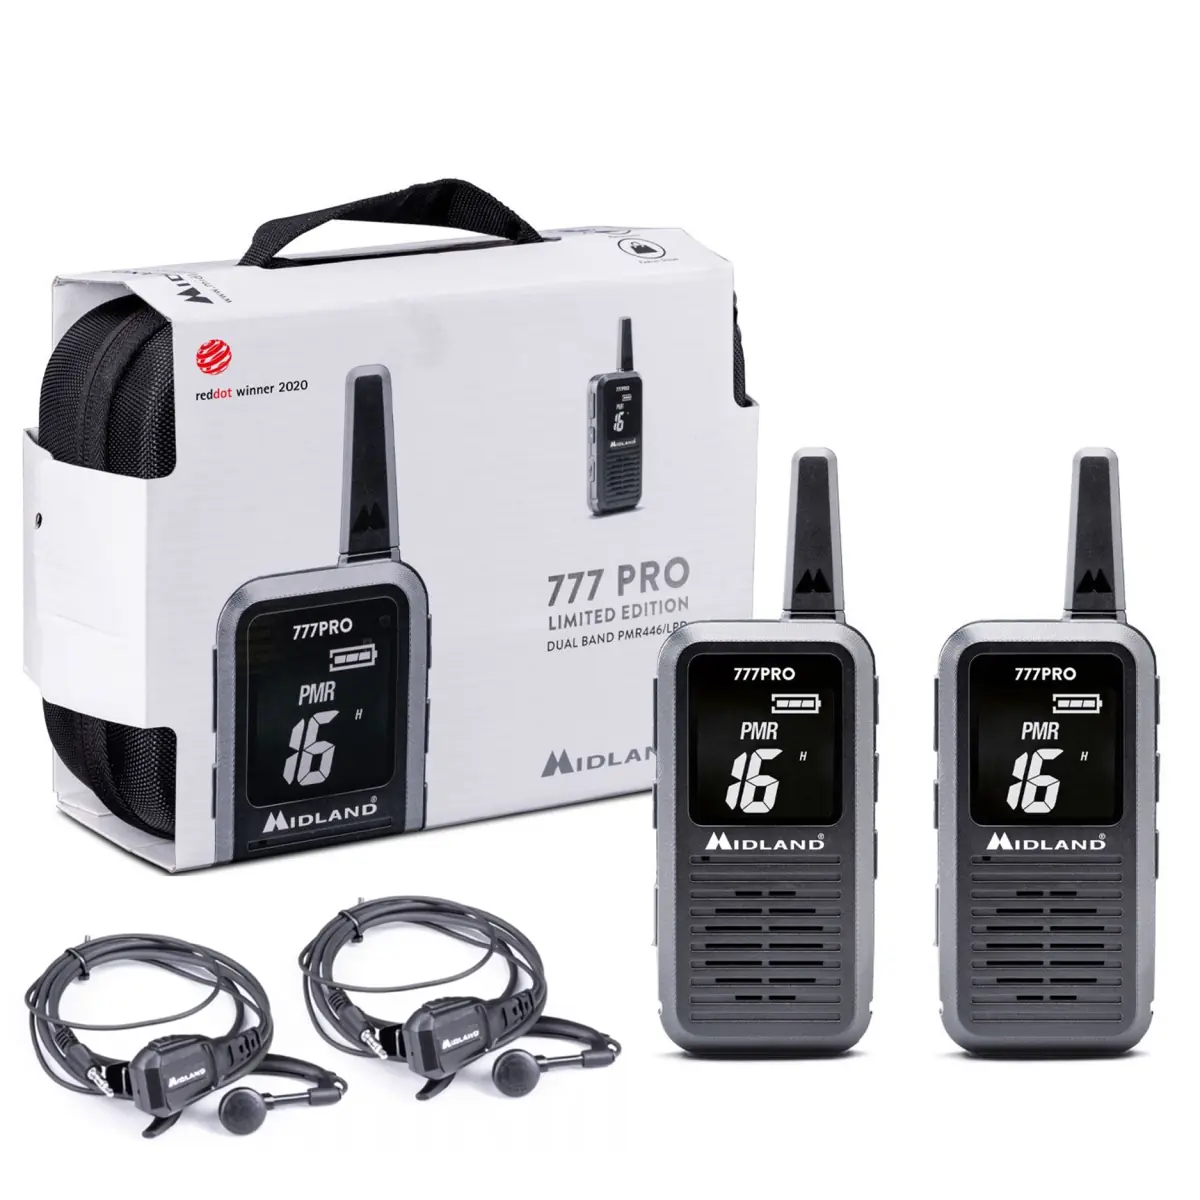 Midland 777 Pro Limited Edition - Portofoons-walkies - C1365.01